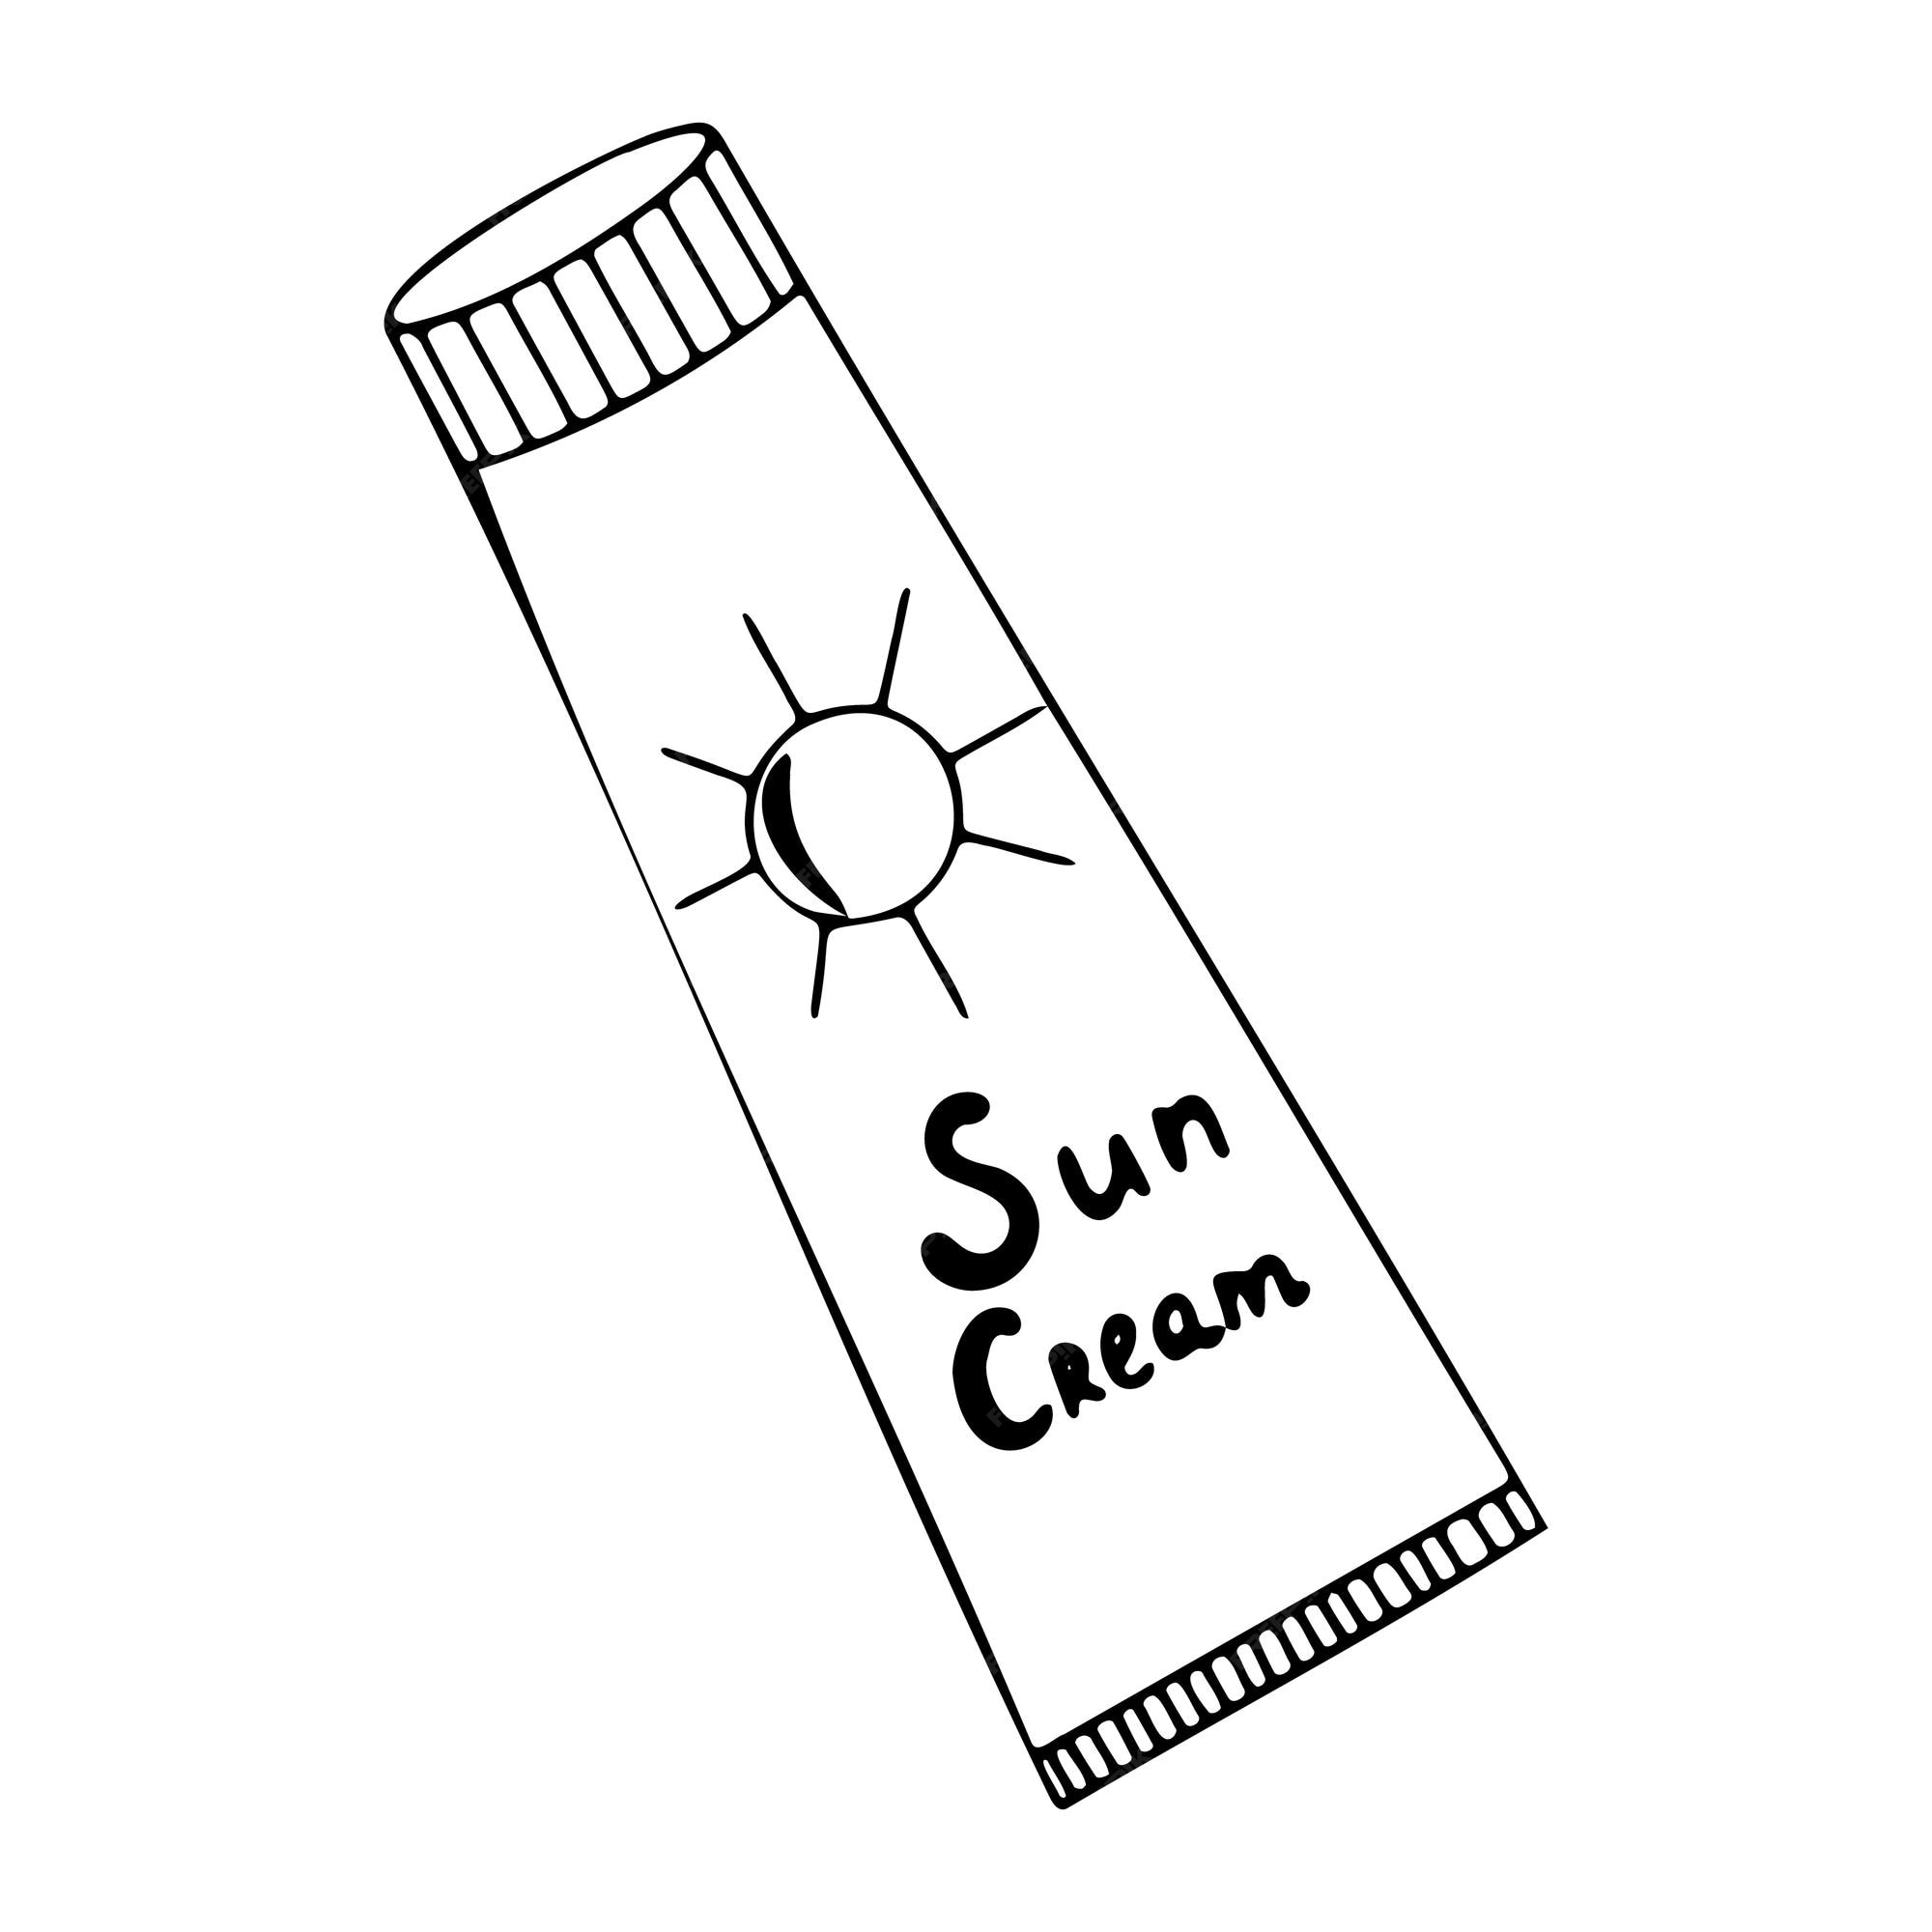 Premium vector vector doodle icon of a tube of sun cream